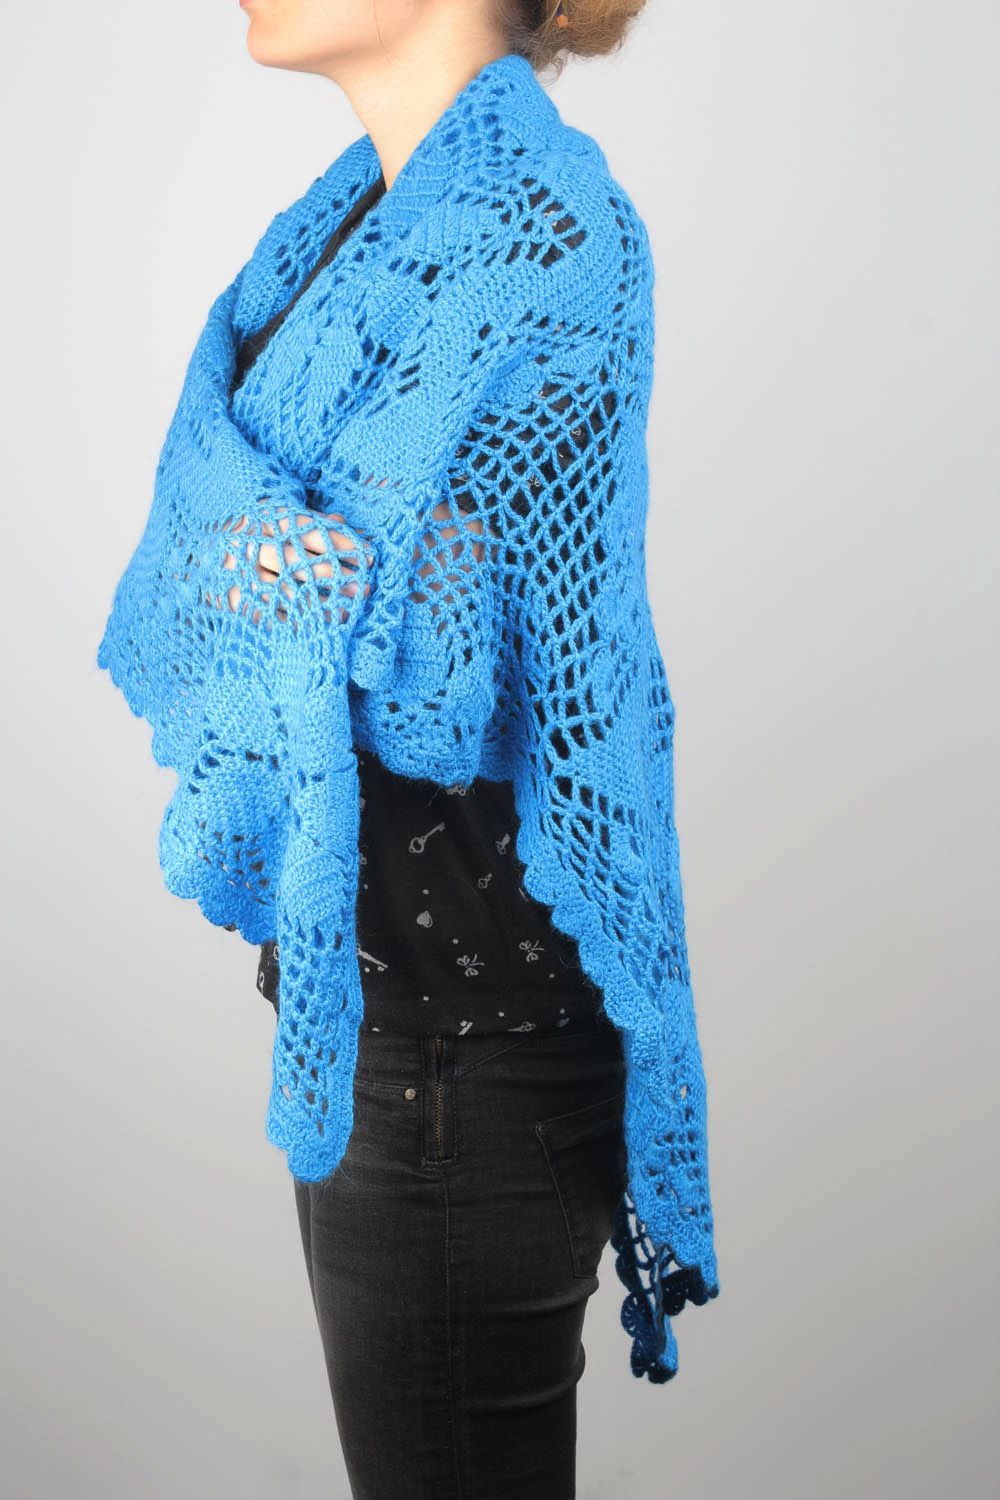 Blue crochet shawl photo 5